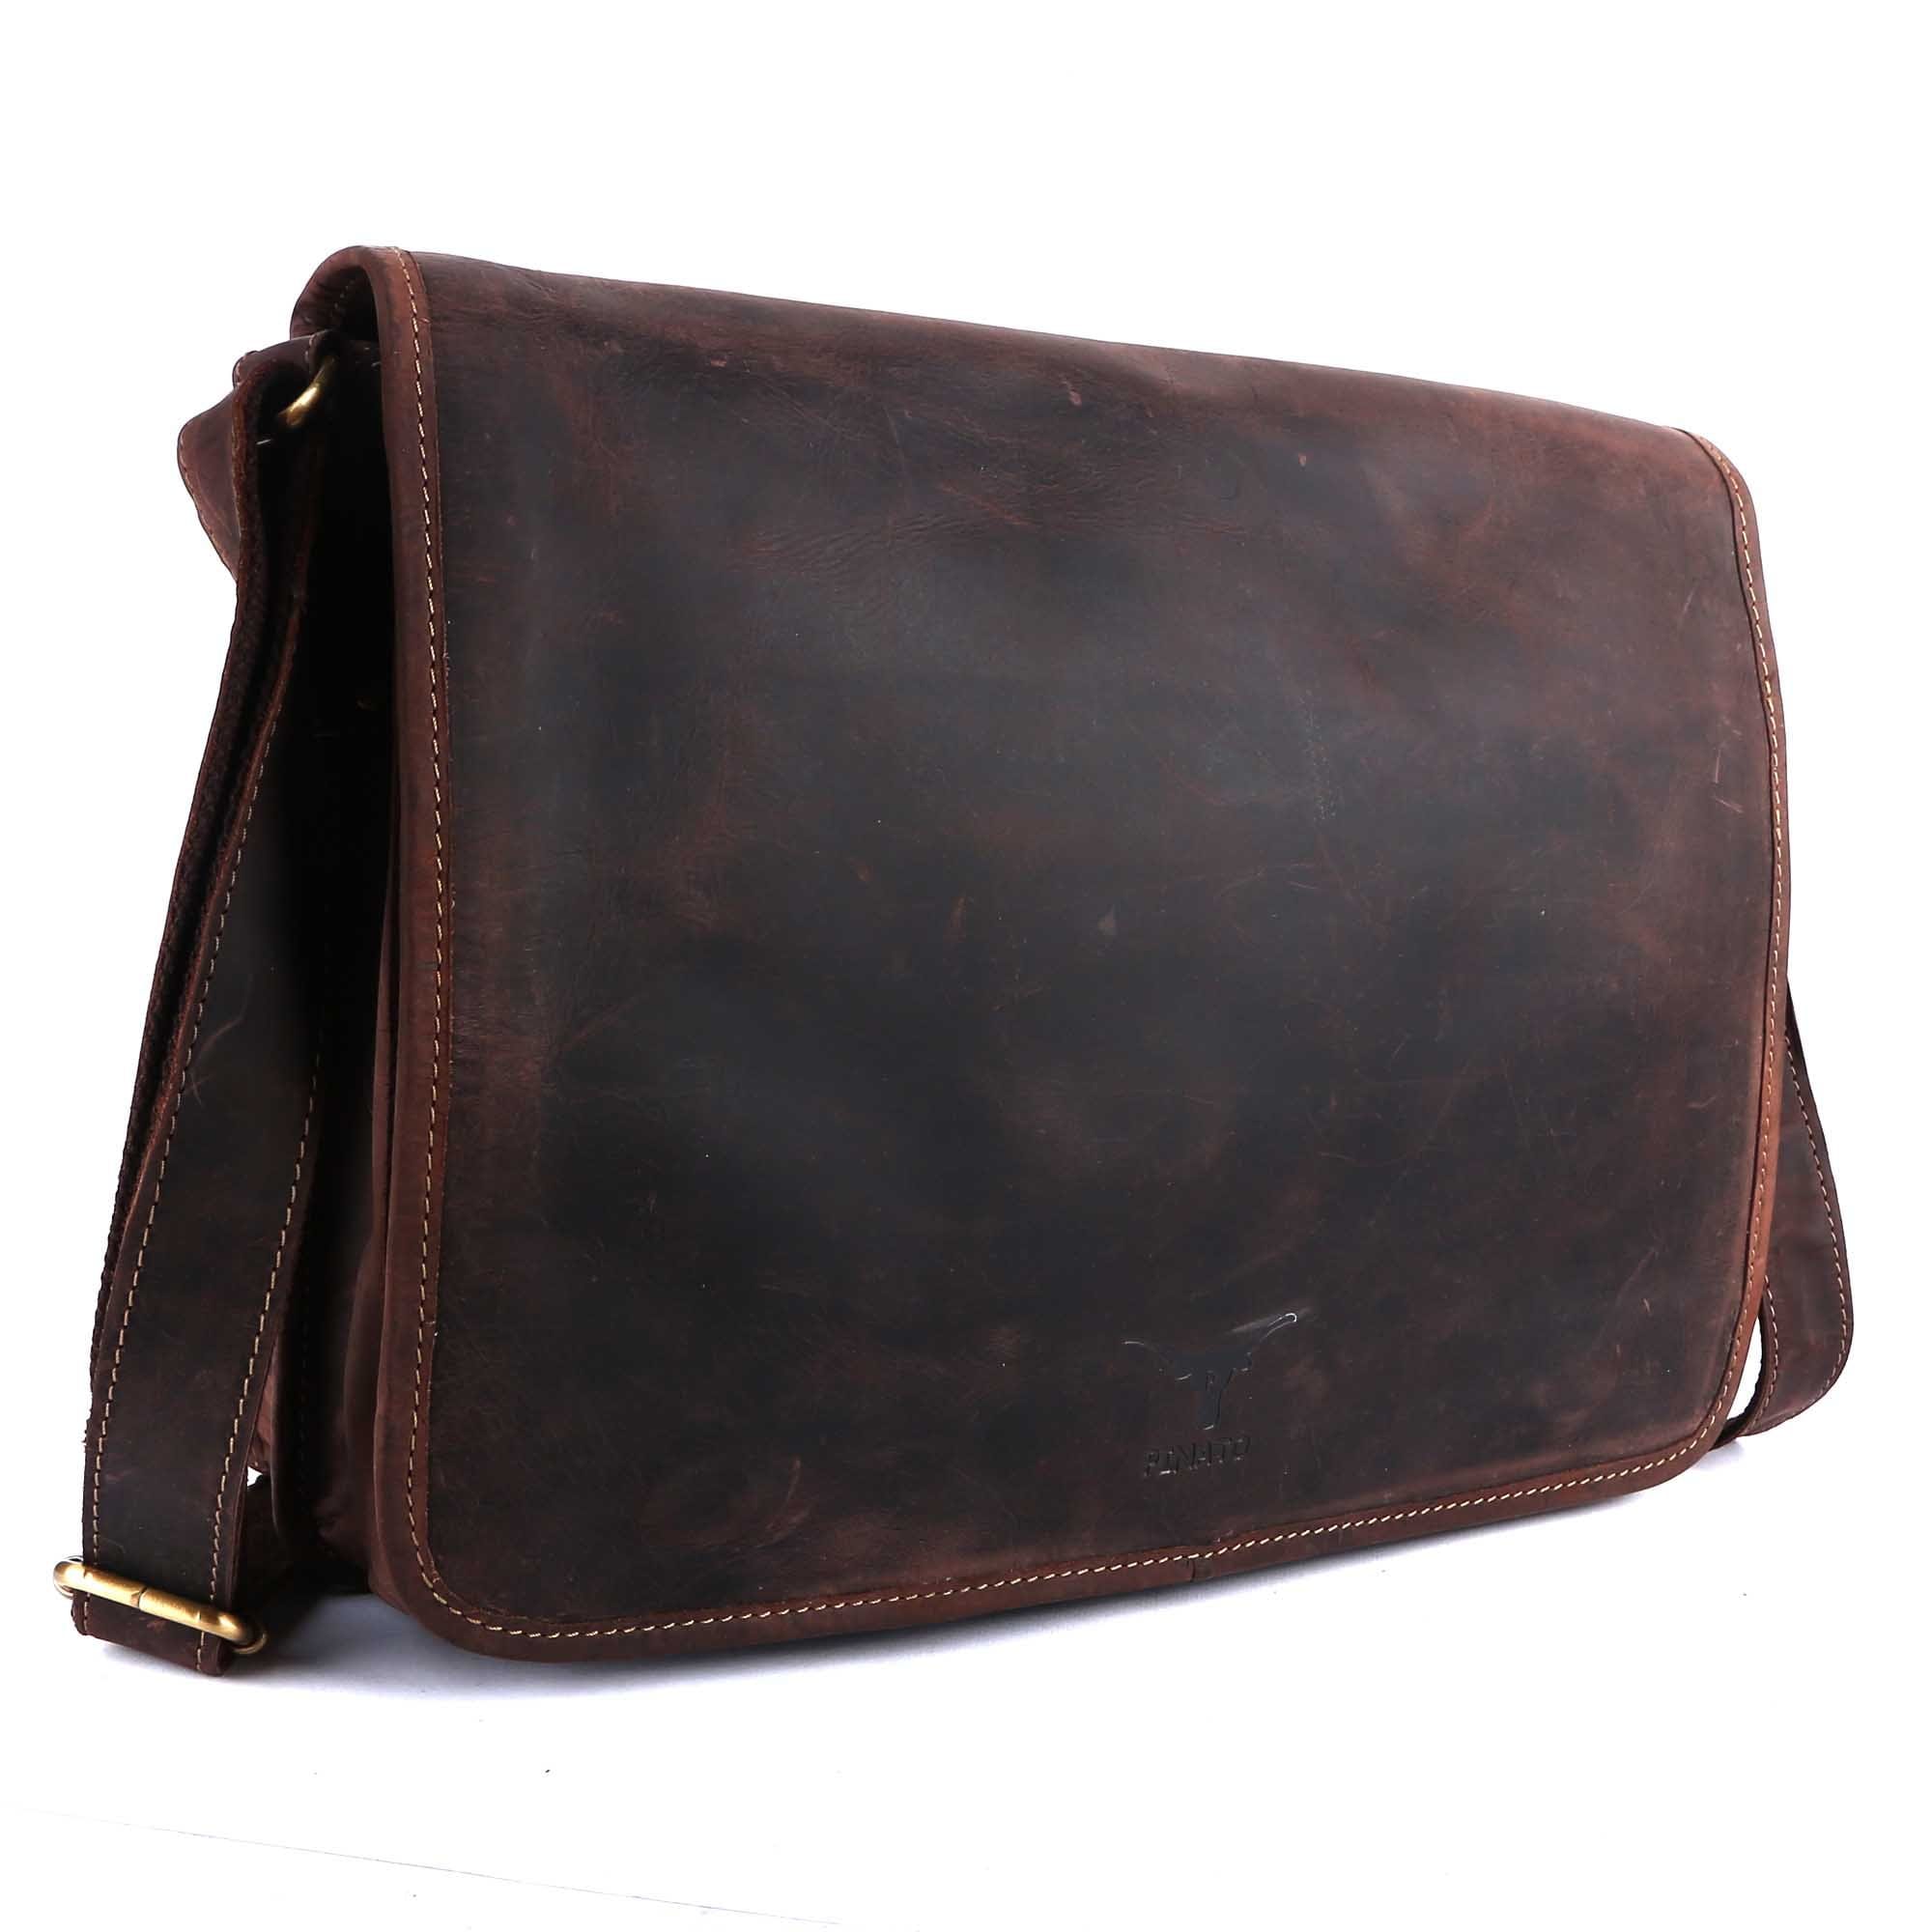 Pinato Genuine Leather Laptop Bag Brown for Men & Women (PL-6518)